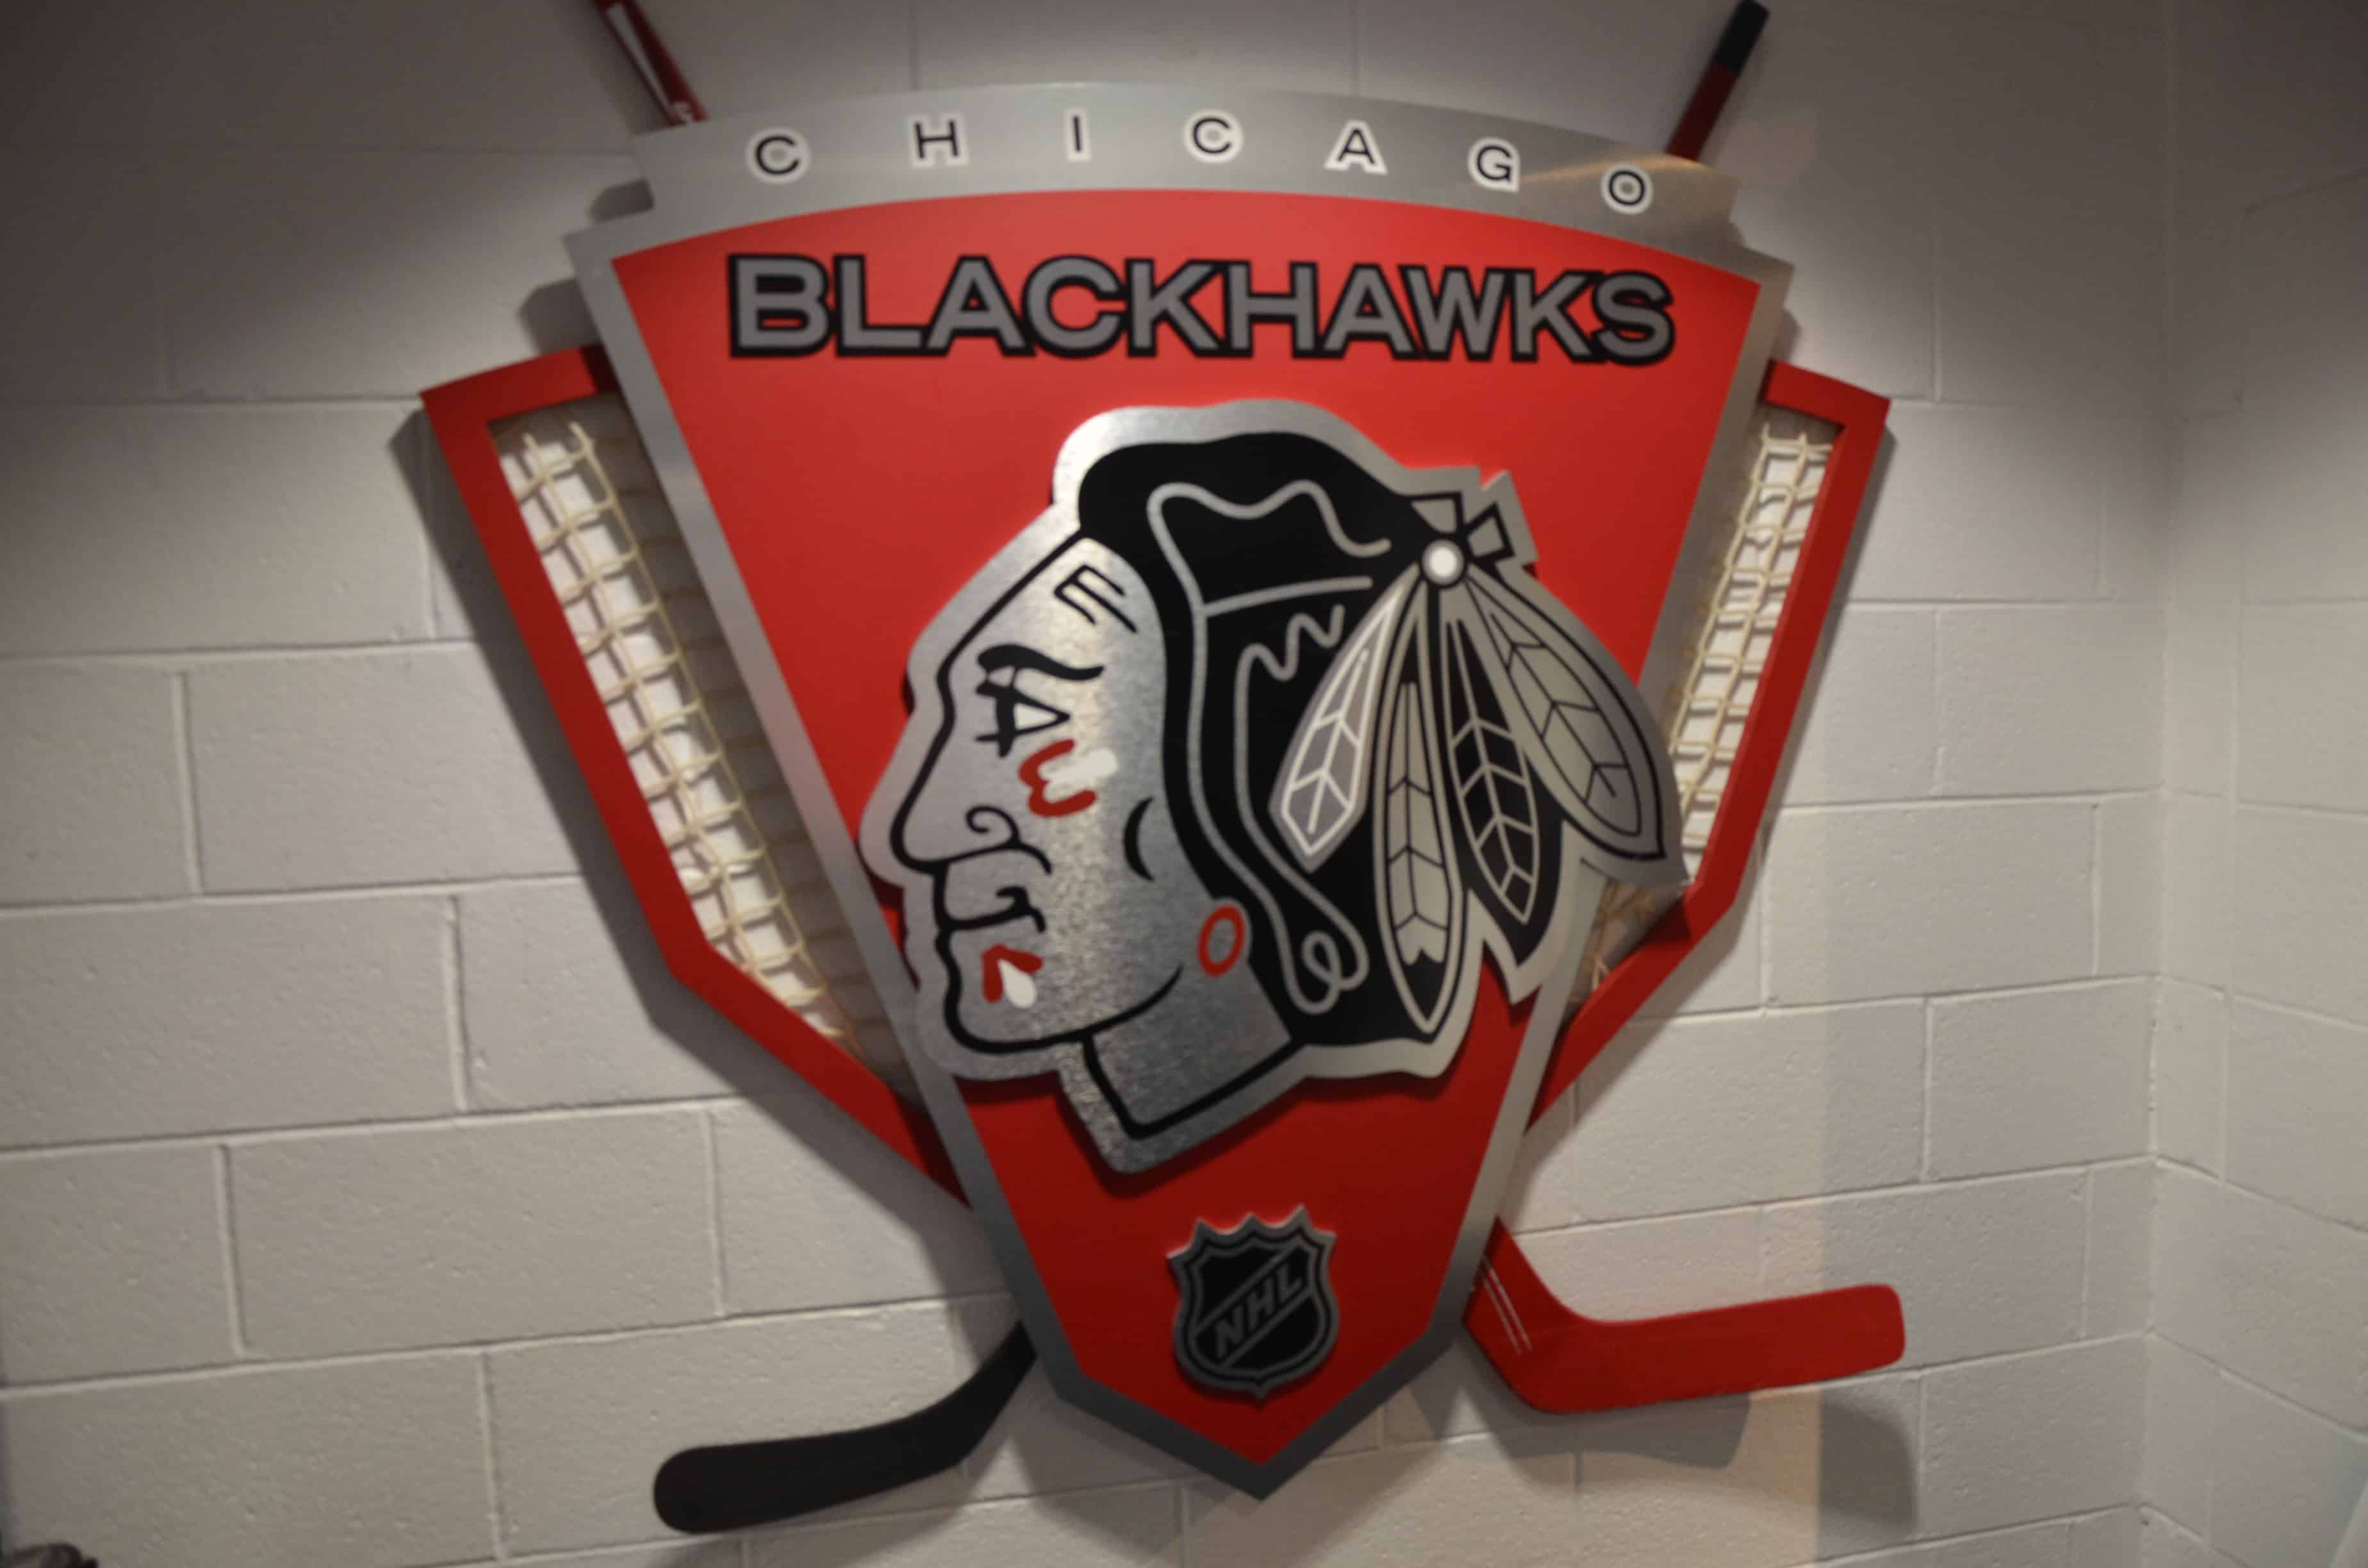 Chicago Blackhawks locker room at the United Center, Chicago, Illinois